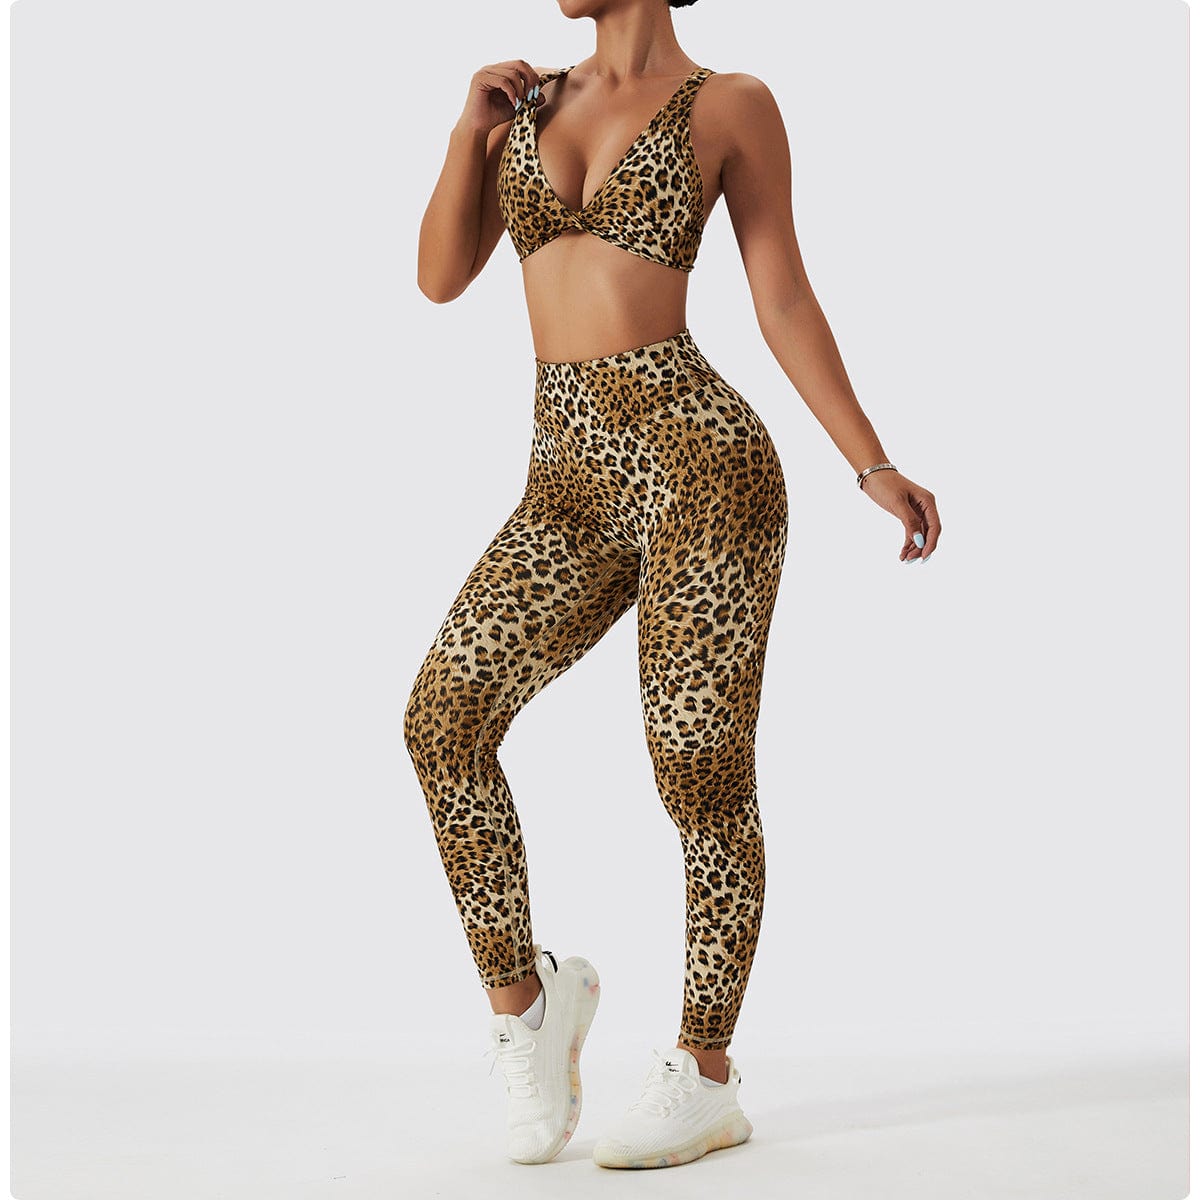 SqueezMeSkinny Leopard Print Workout Peach-Lift Yoga Set